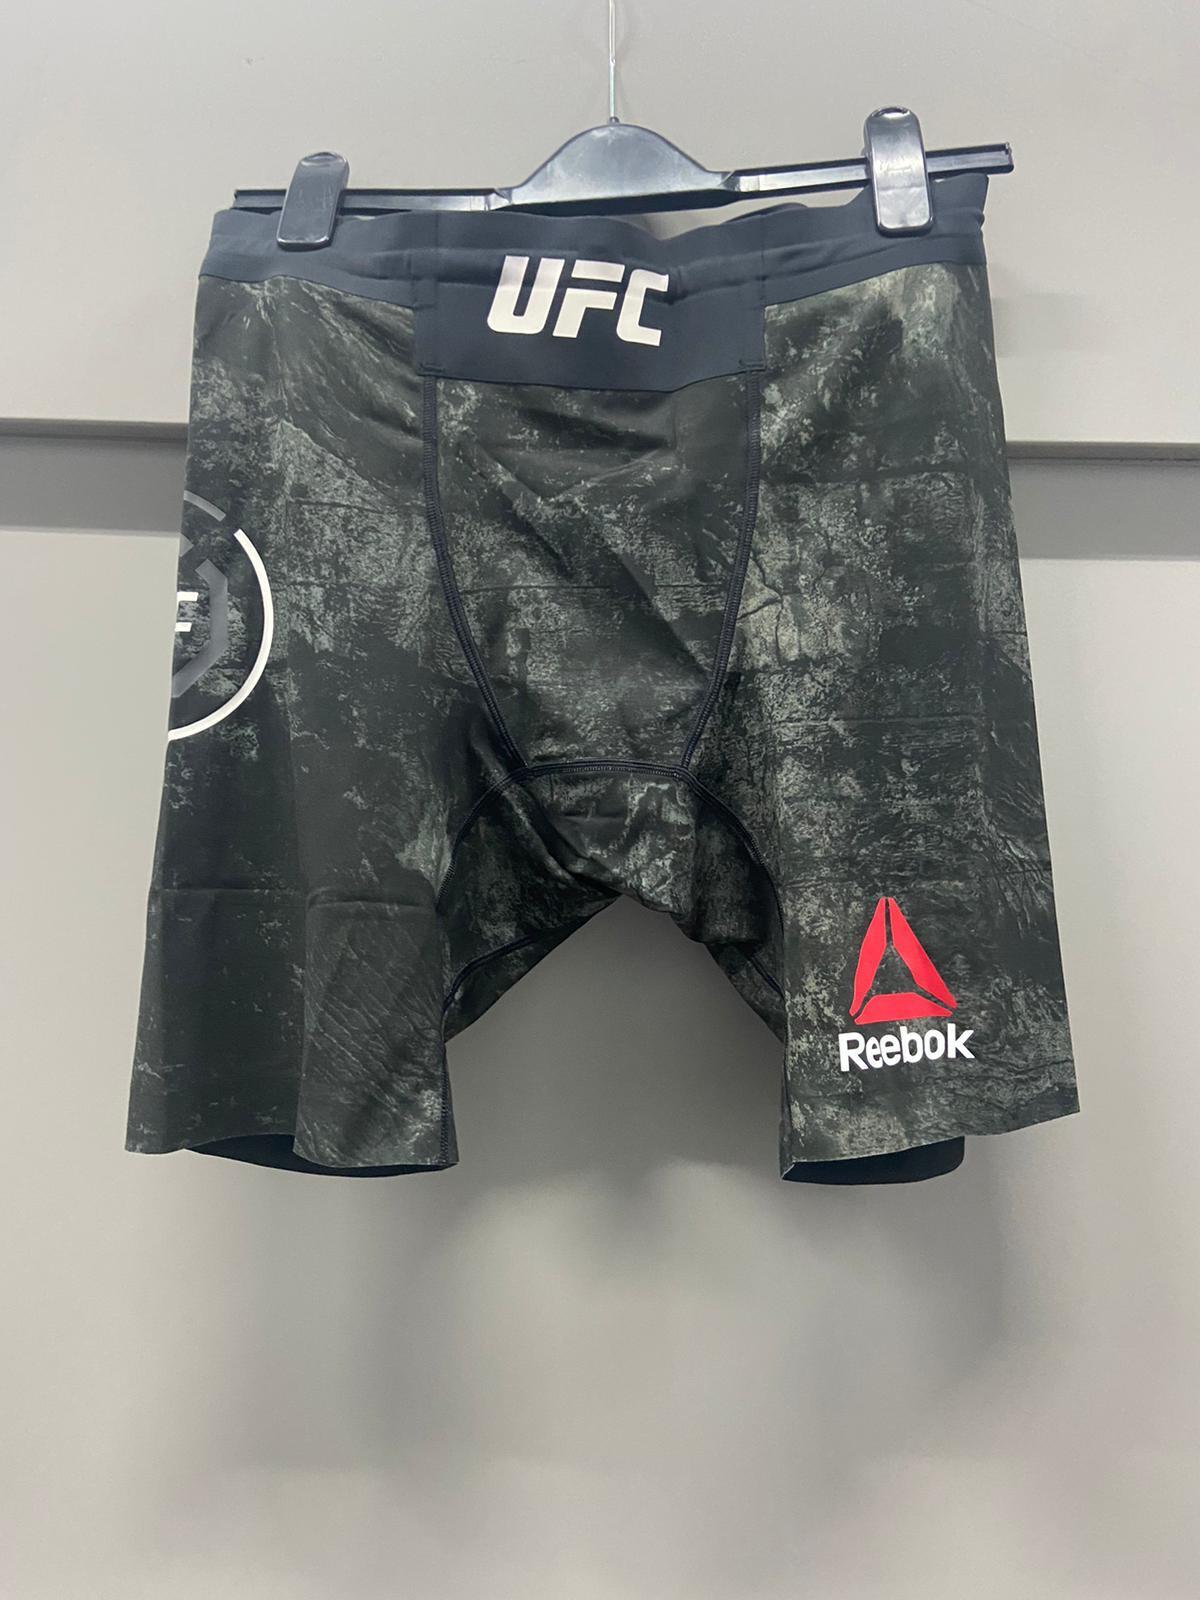 UFC Reebok Gladiator Shorts, MMA Gladiator Shorts